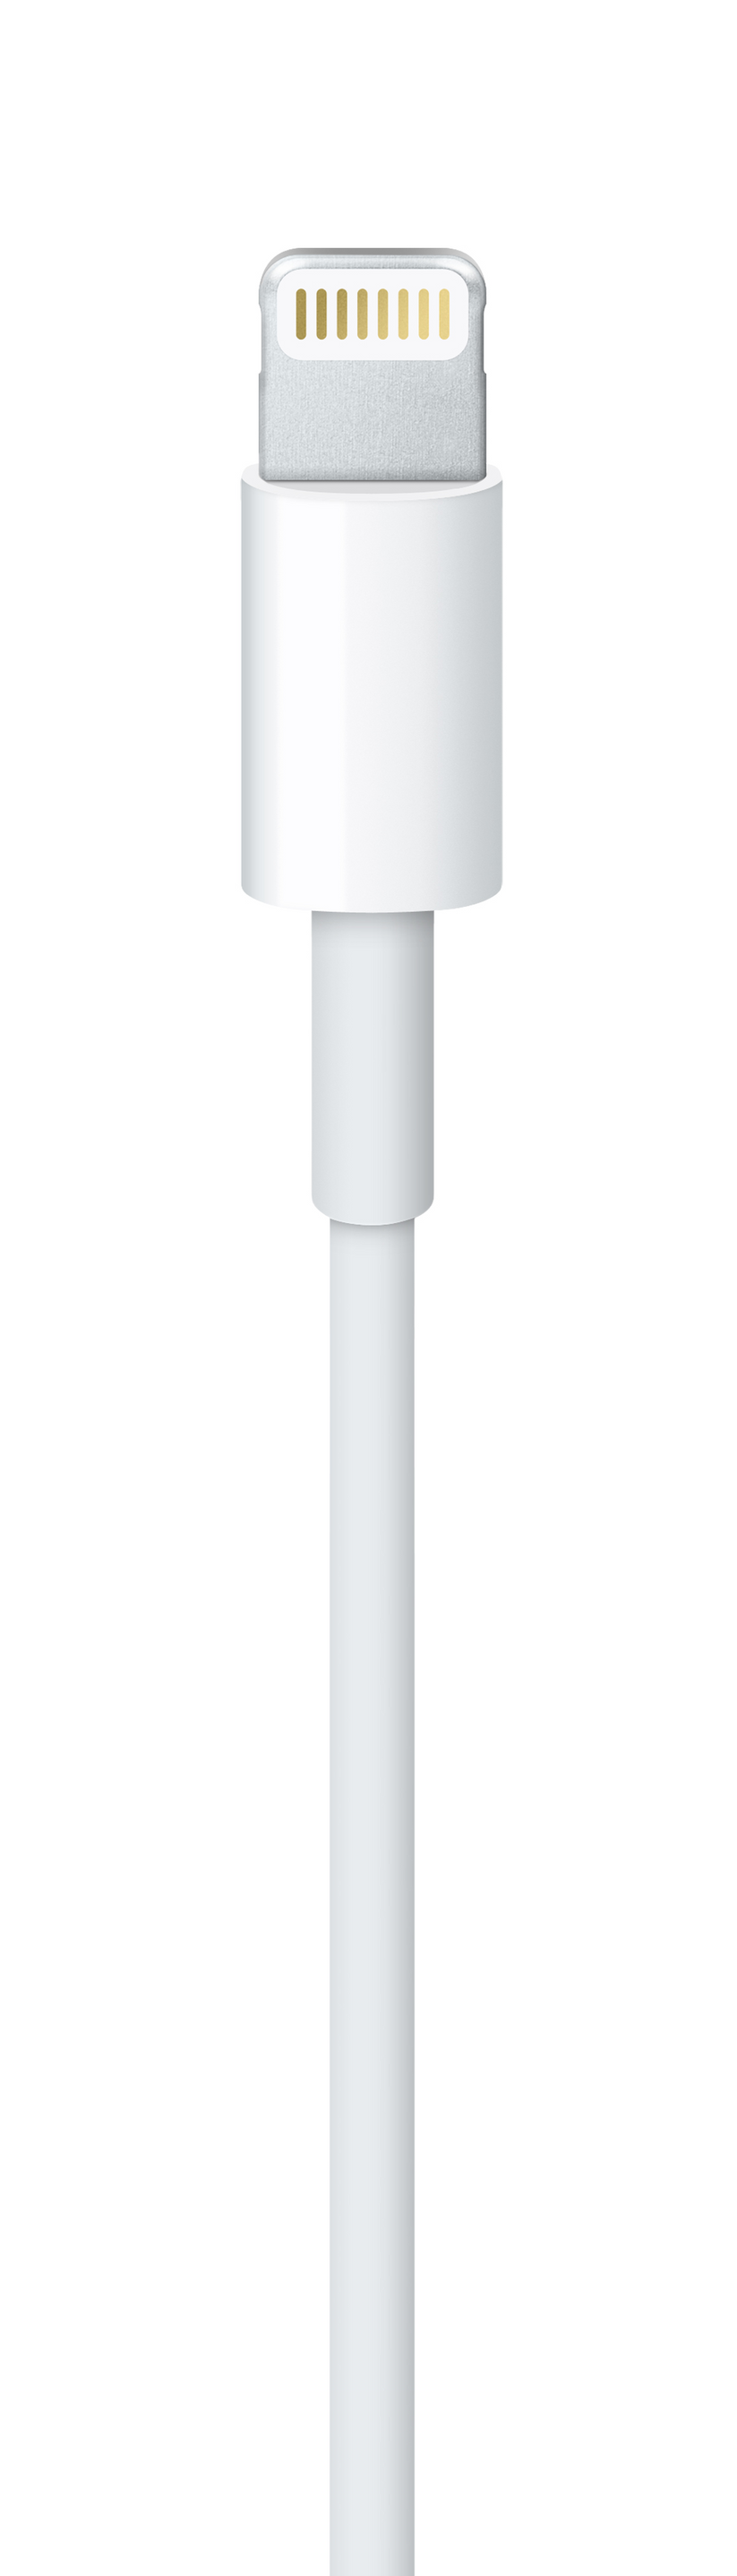 Cargador Apple Adaptador de Corriente para iPhone iPad iPod